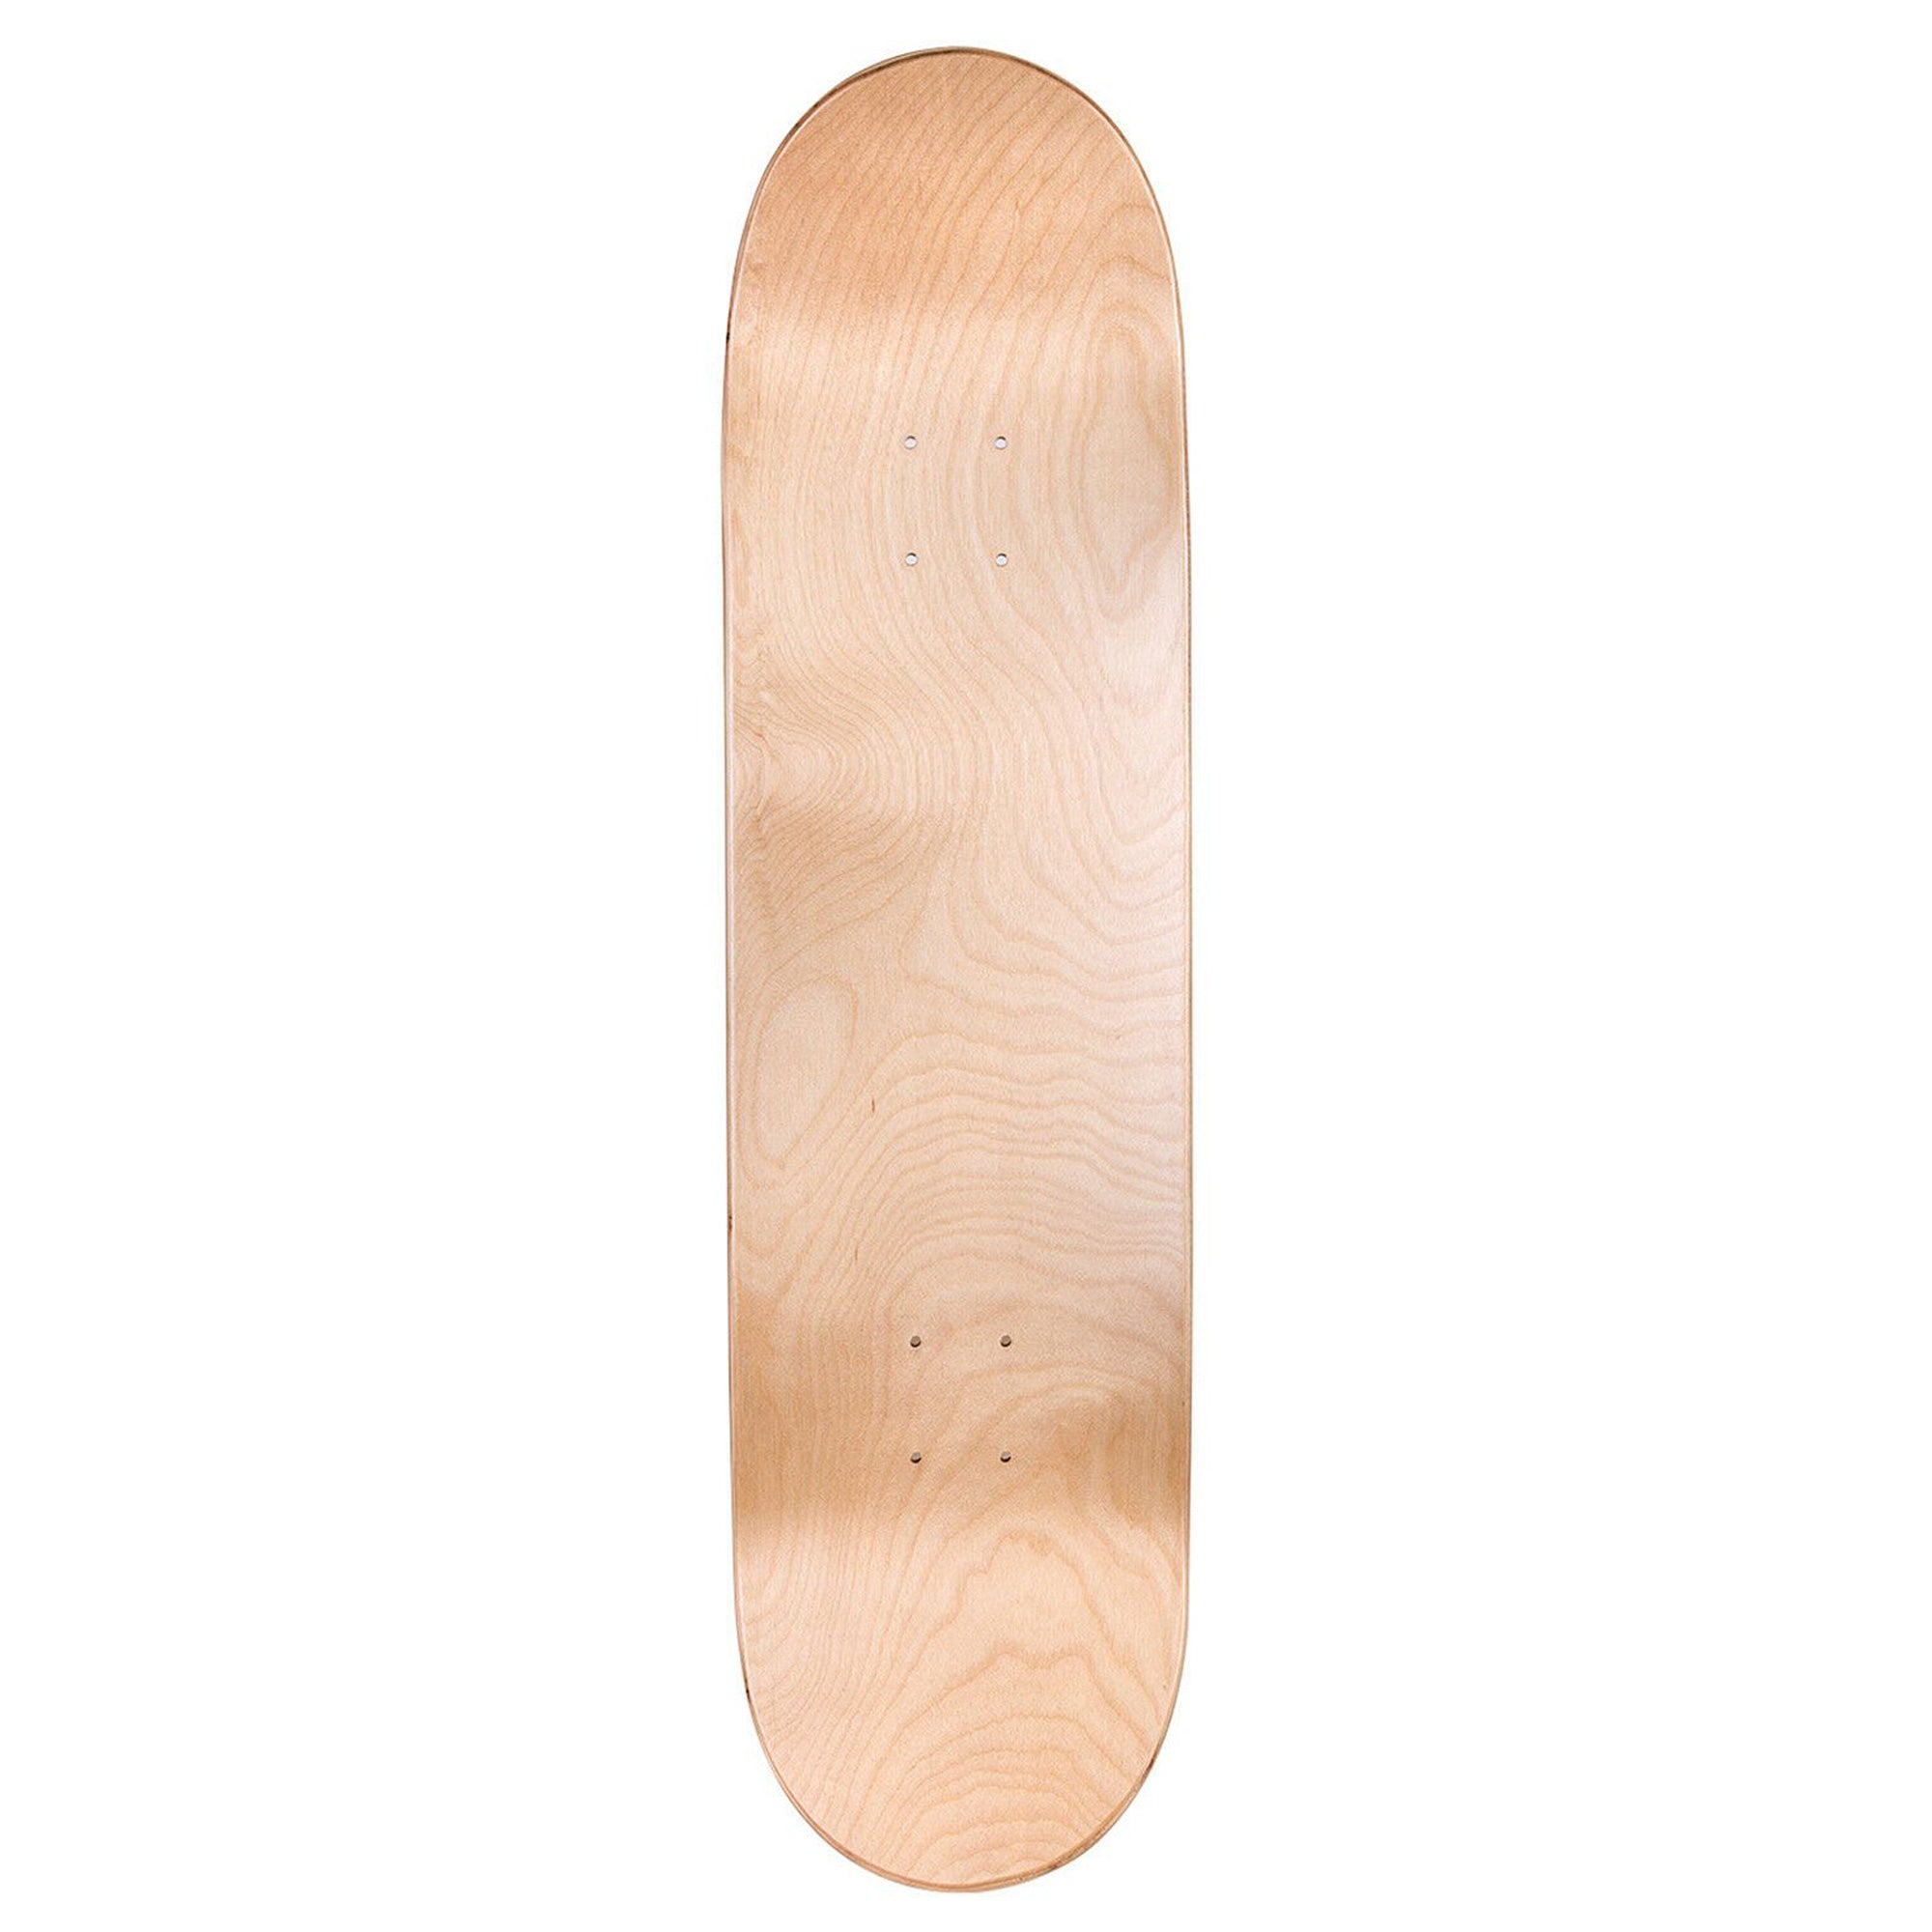 Blank Canadian Maple Skateboard Decks – Cal 7